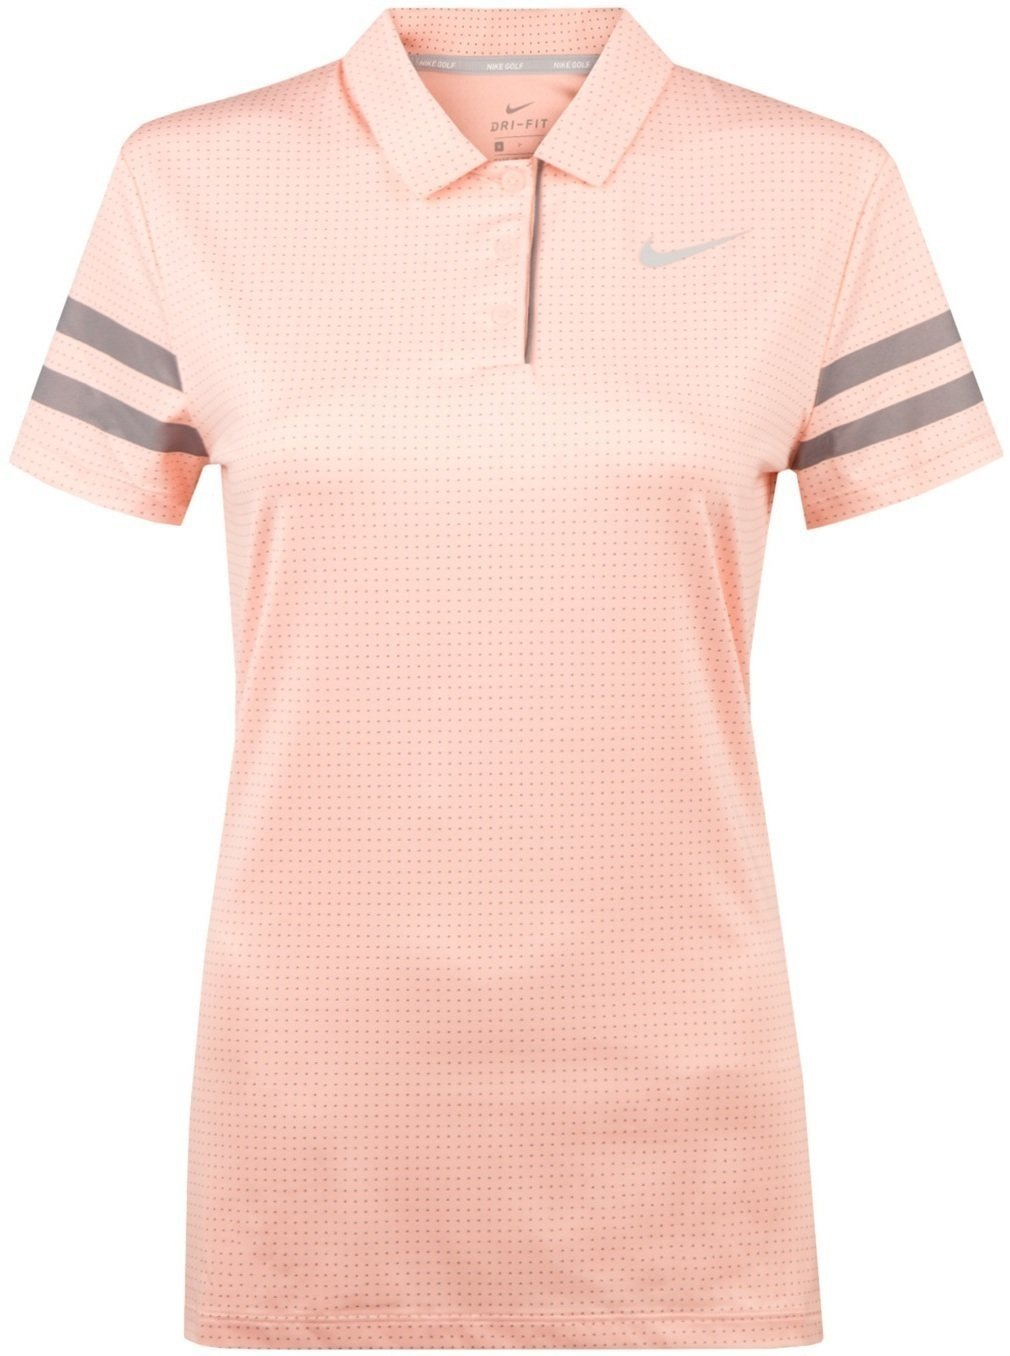 Camiseta polo Nike Dri-Fit Printed Womens Polo Storm Pink/Anthracite/White S